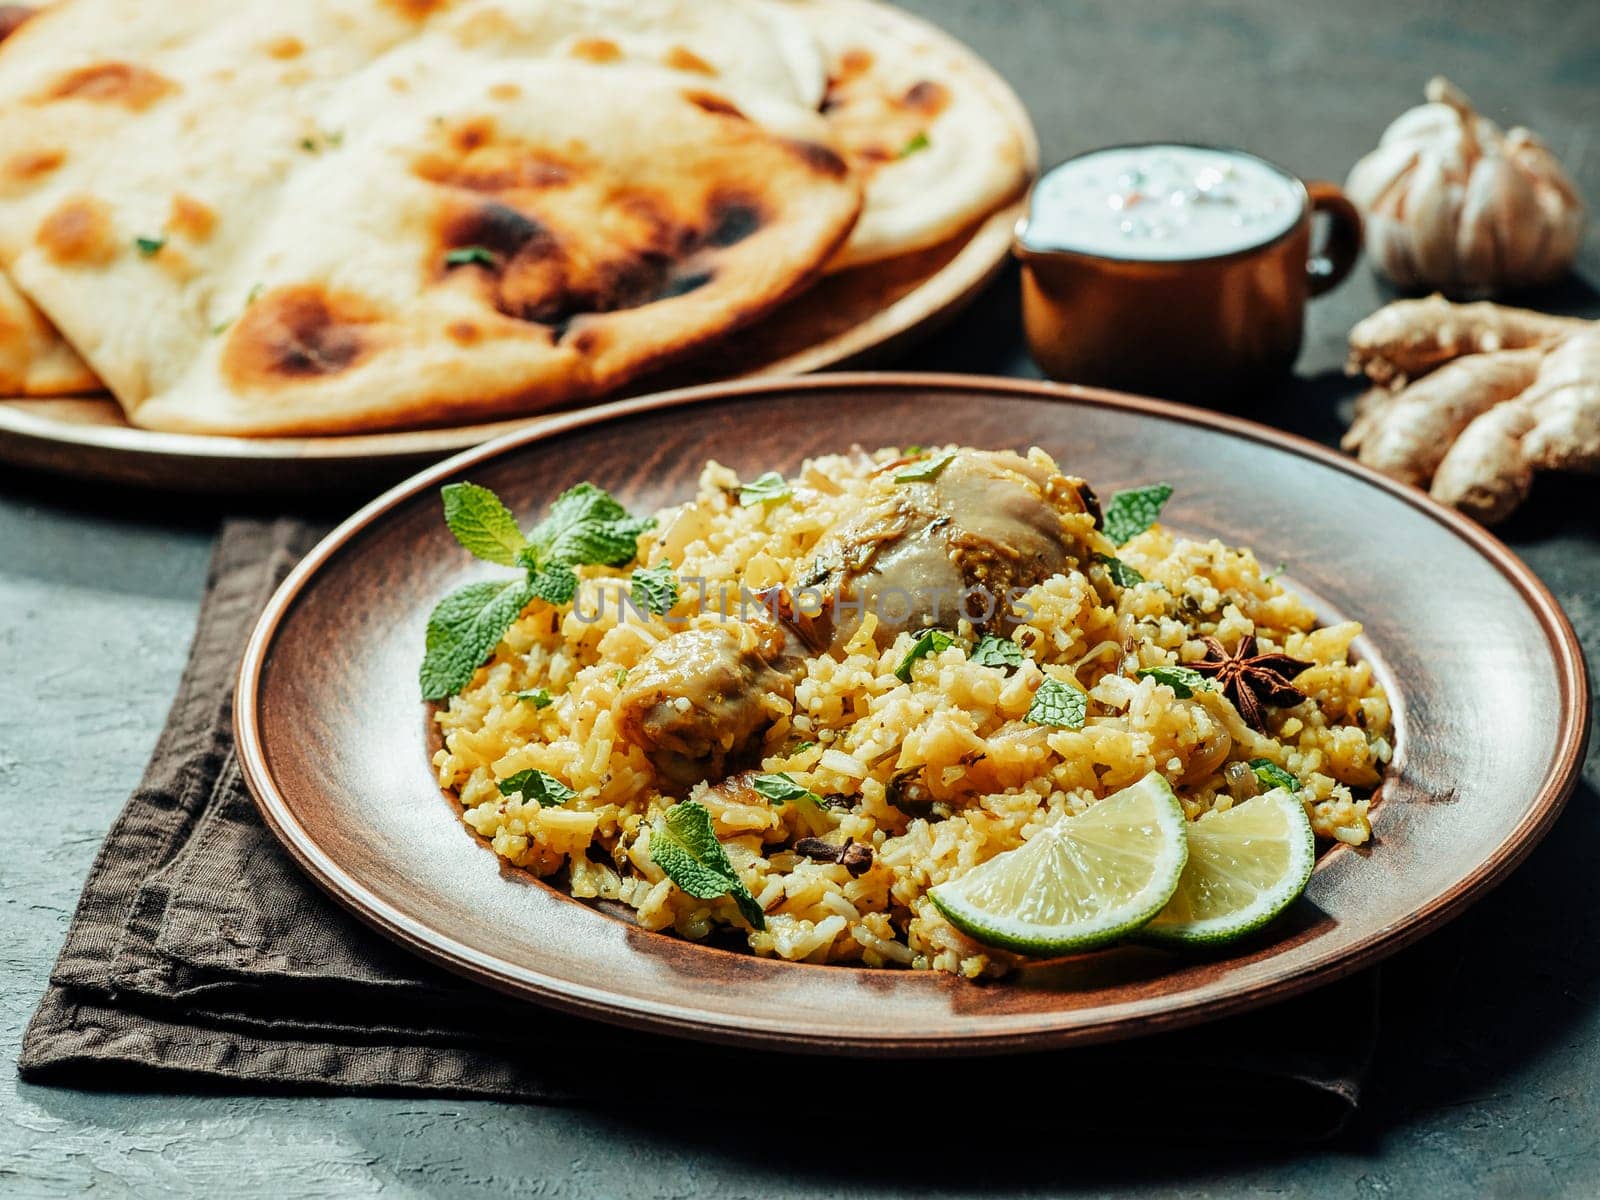 Pakistani food - biryani rice with chicken, raita yoghurt dip and naan flat bread. Delicious hyberabadi chicken biryani on black background